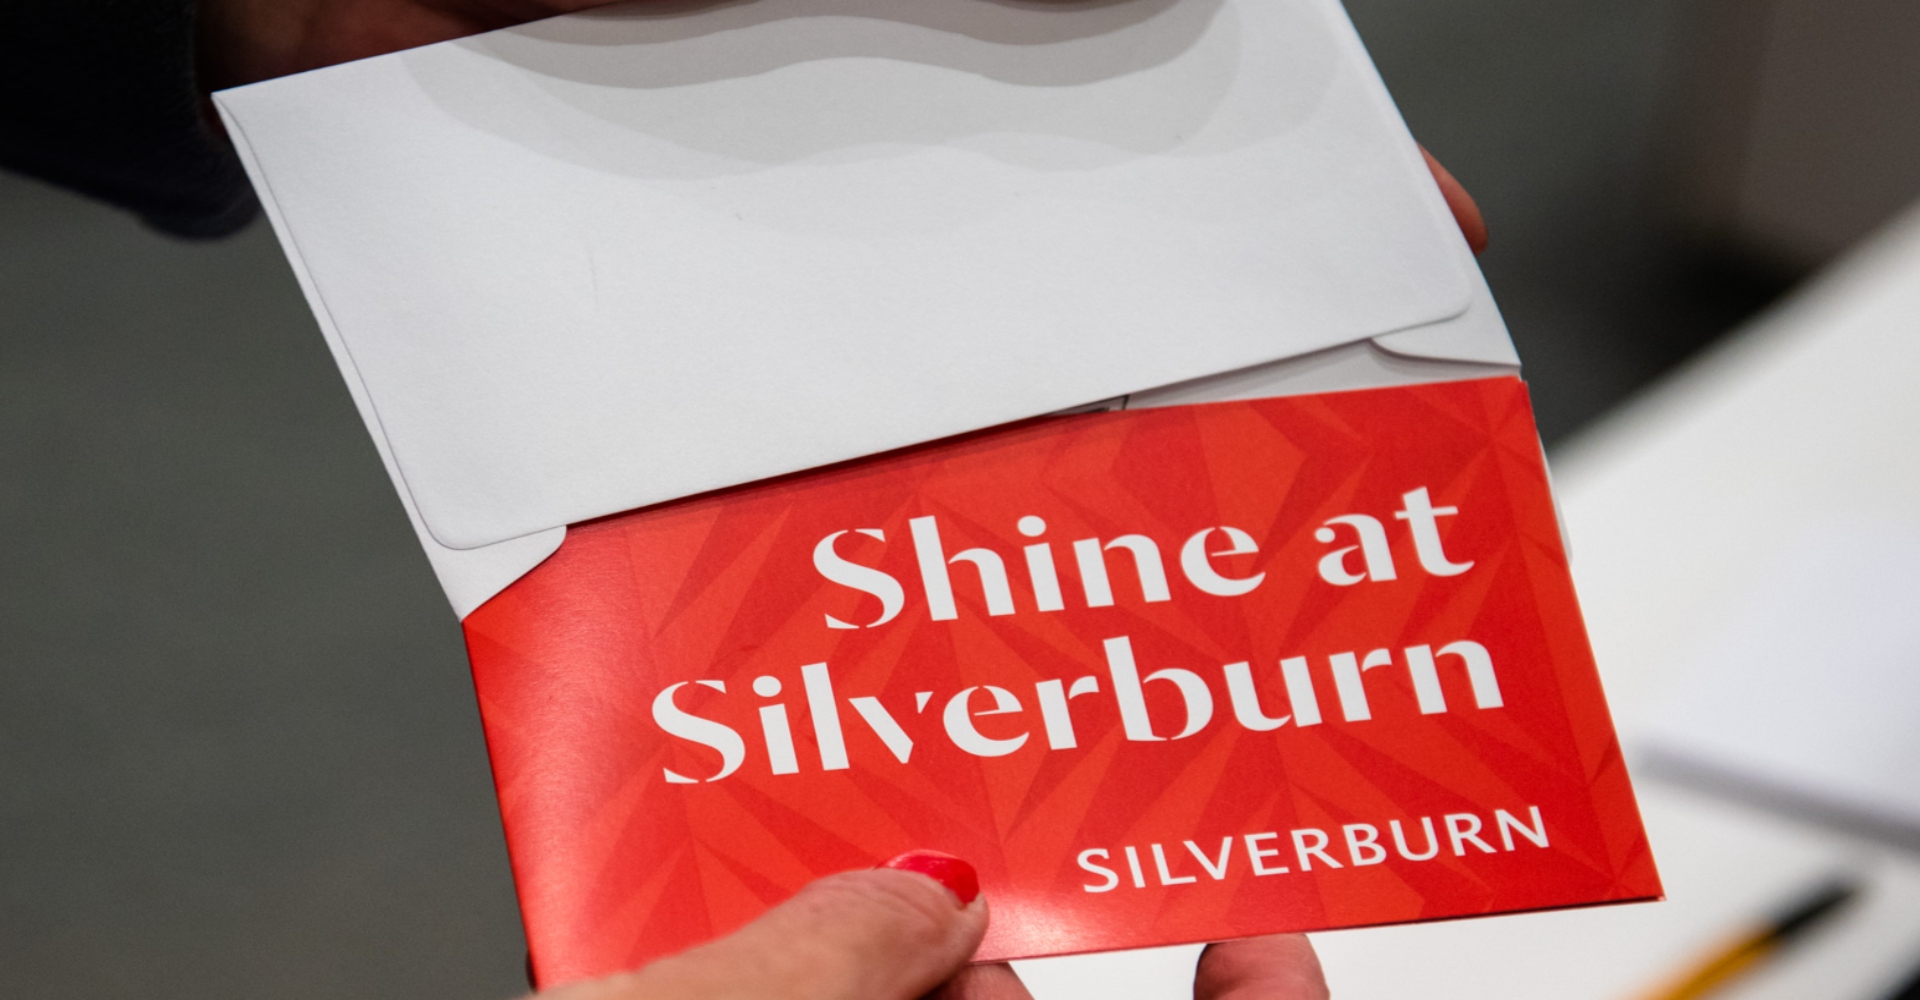 Silverburn Gift Card | Silverburn Shopping